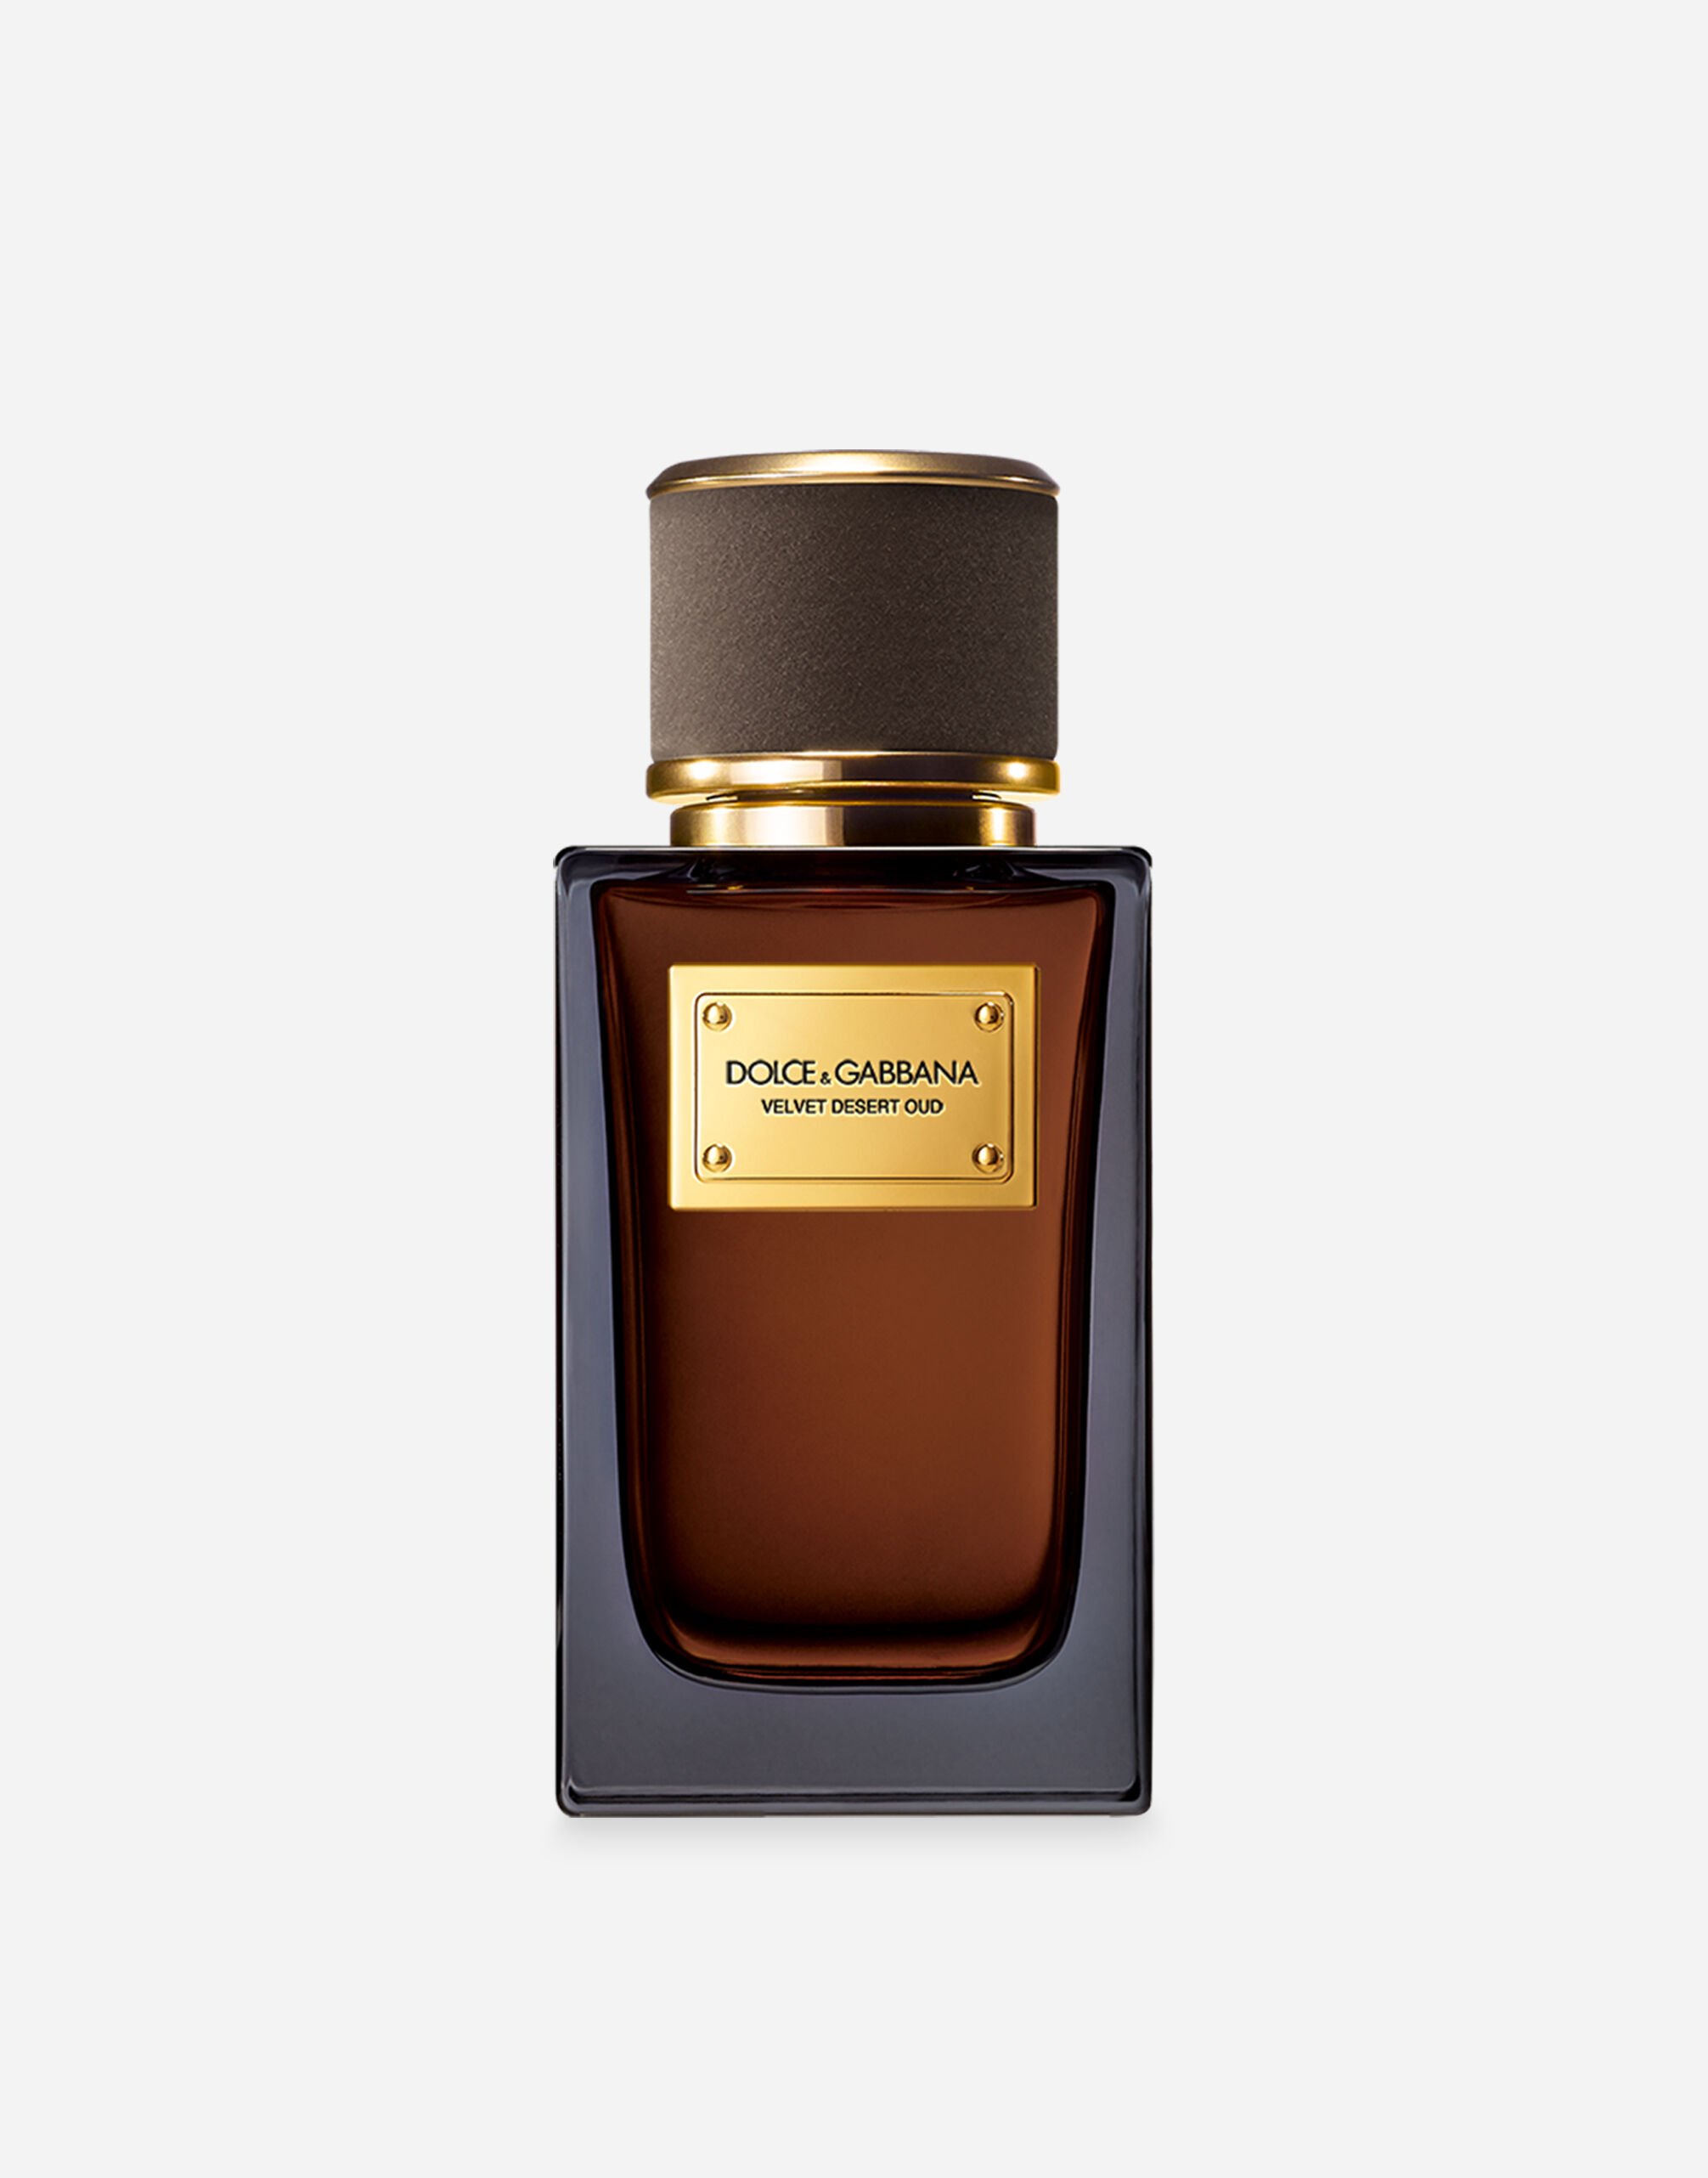 Dolce & Gabbana Velvet Desert Oud Eau de Parfum - VP003BVP000